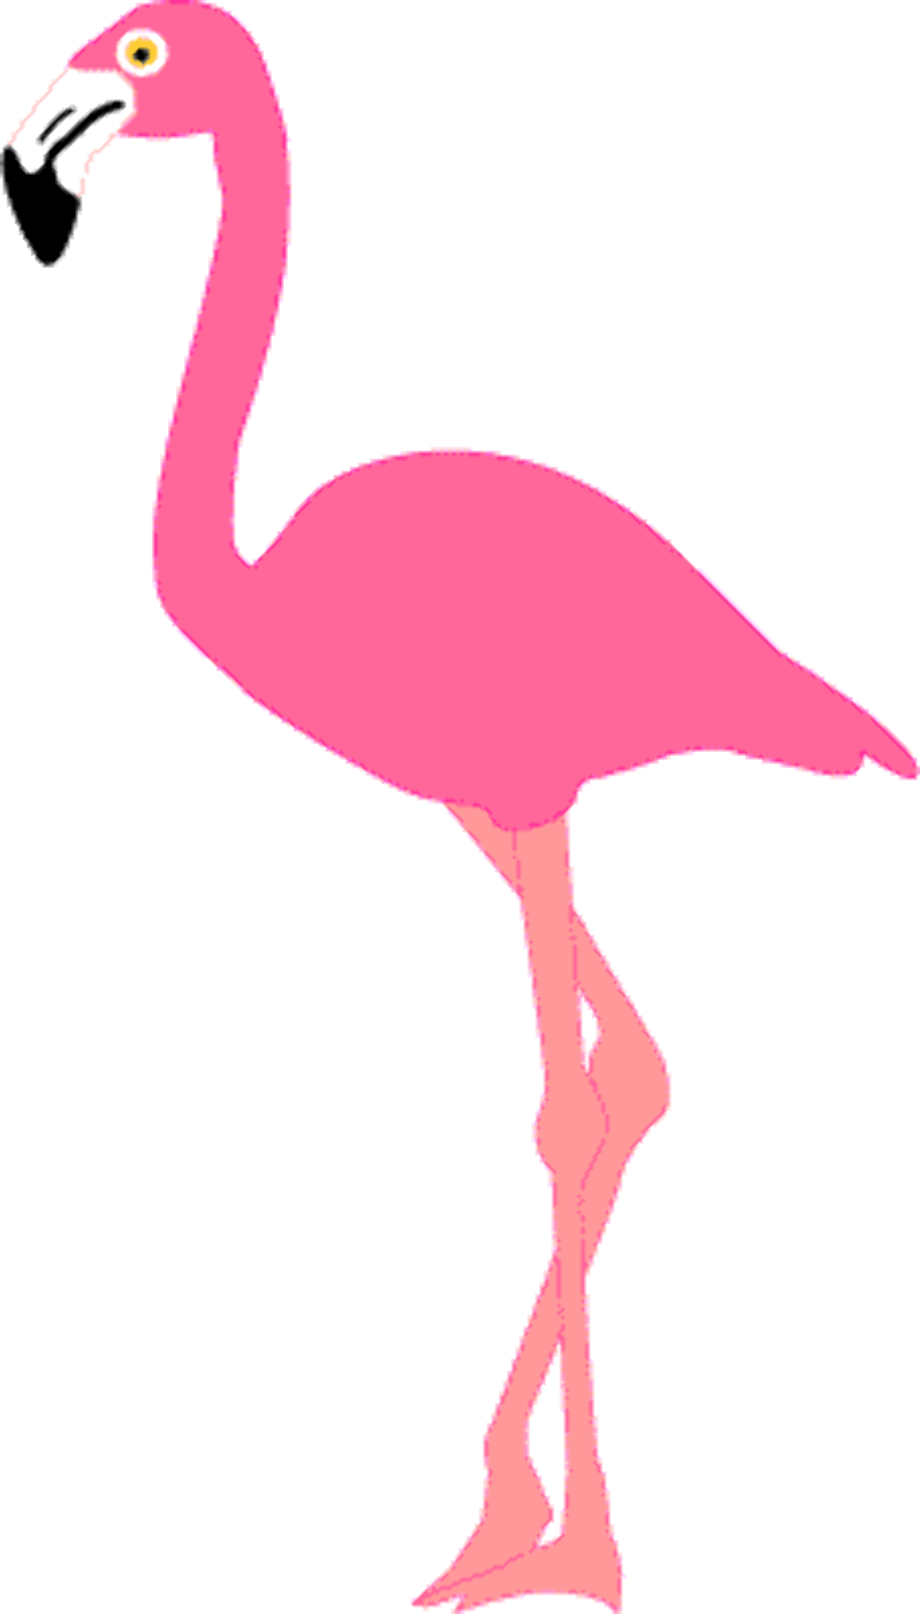 Download High Quality flamingo clipart cartoon Transparent PNG Images